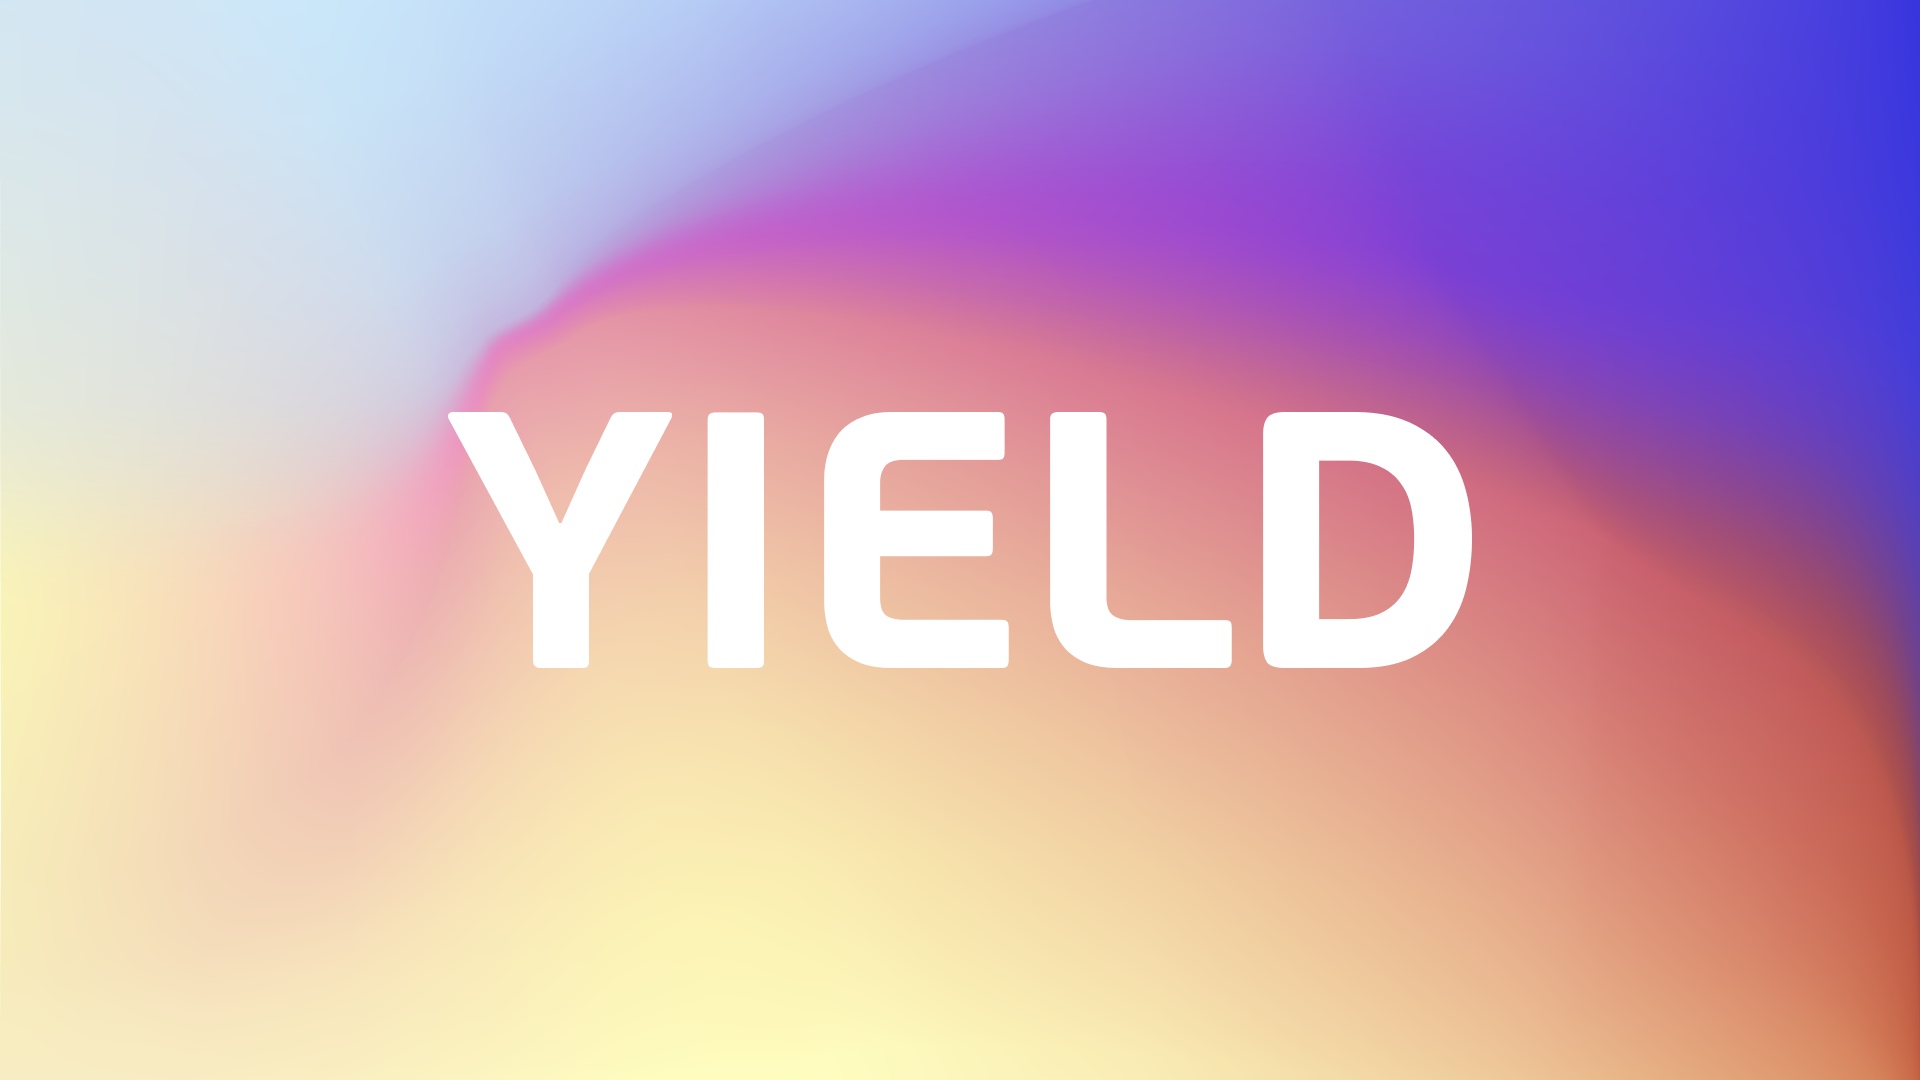 Thumbnail of Yield